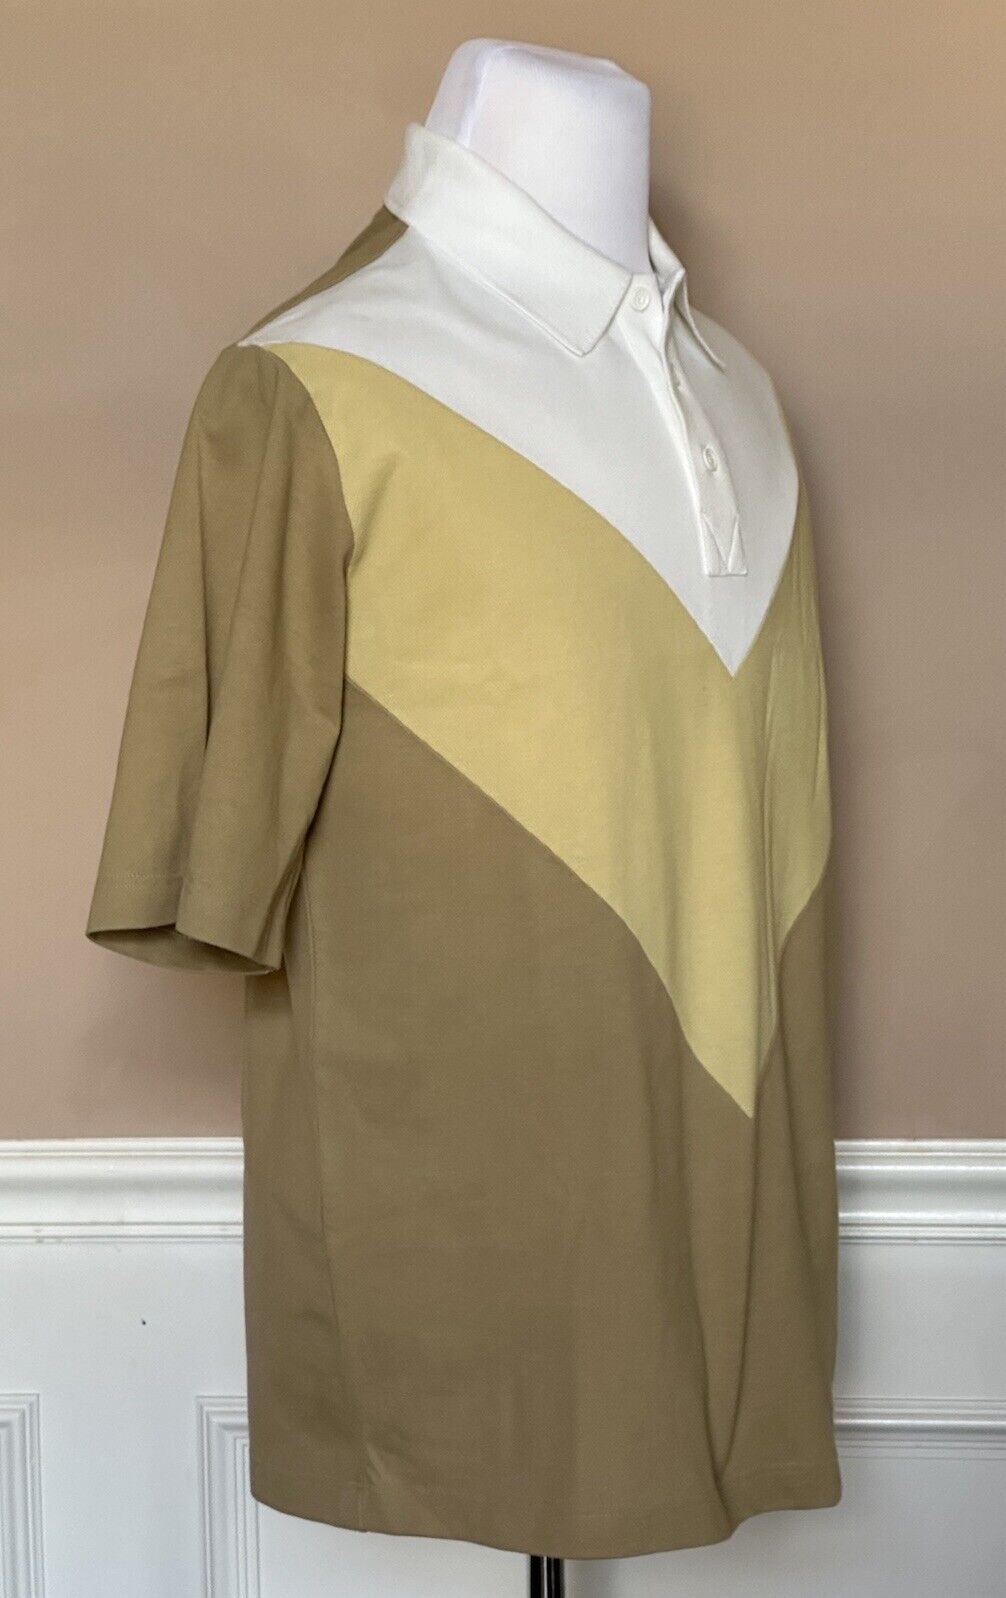 Мужская хлопковая рубашка-поло пике Bottega Veneta, размер M (размер оверсайз), 704205, NWT, 700 долларов США 